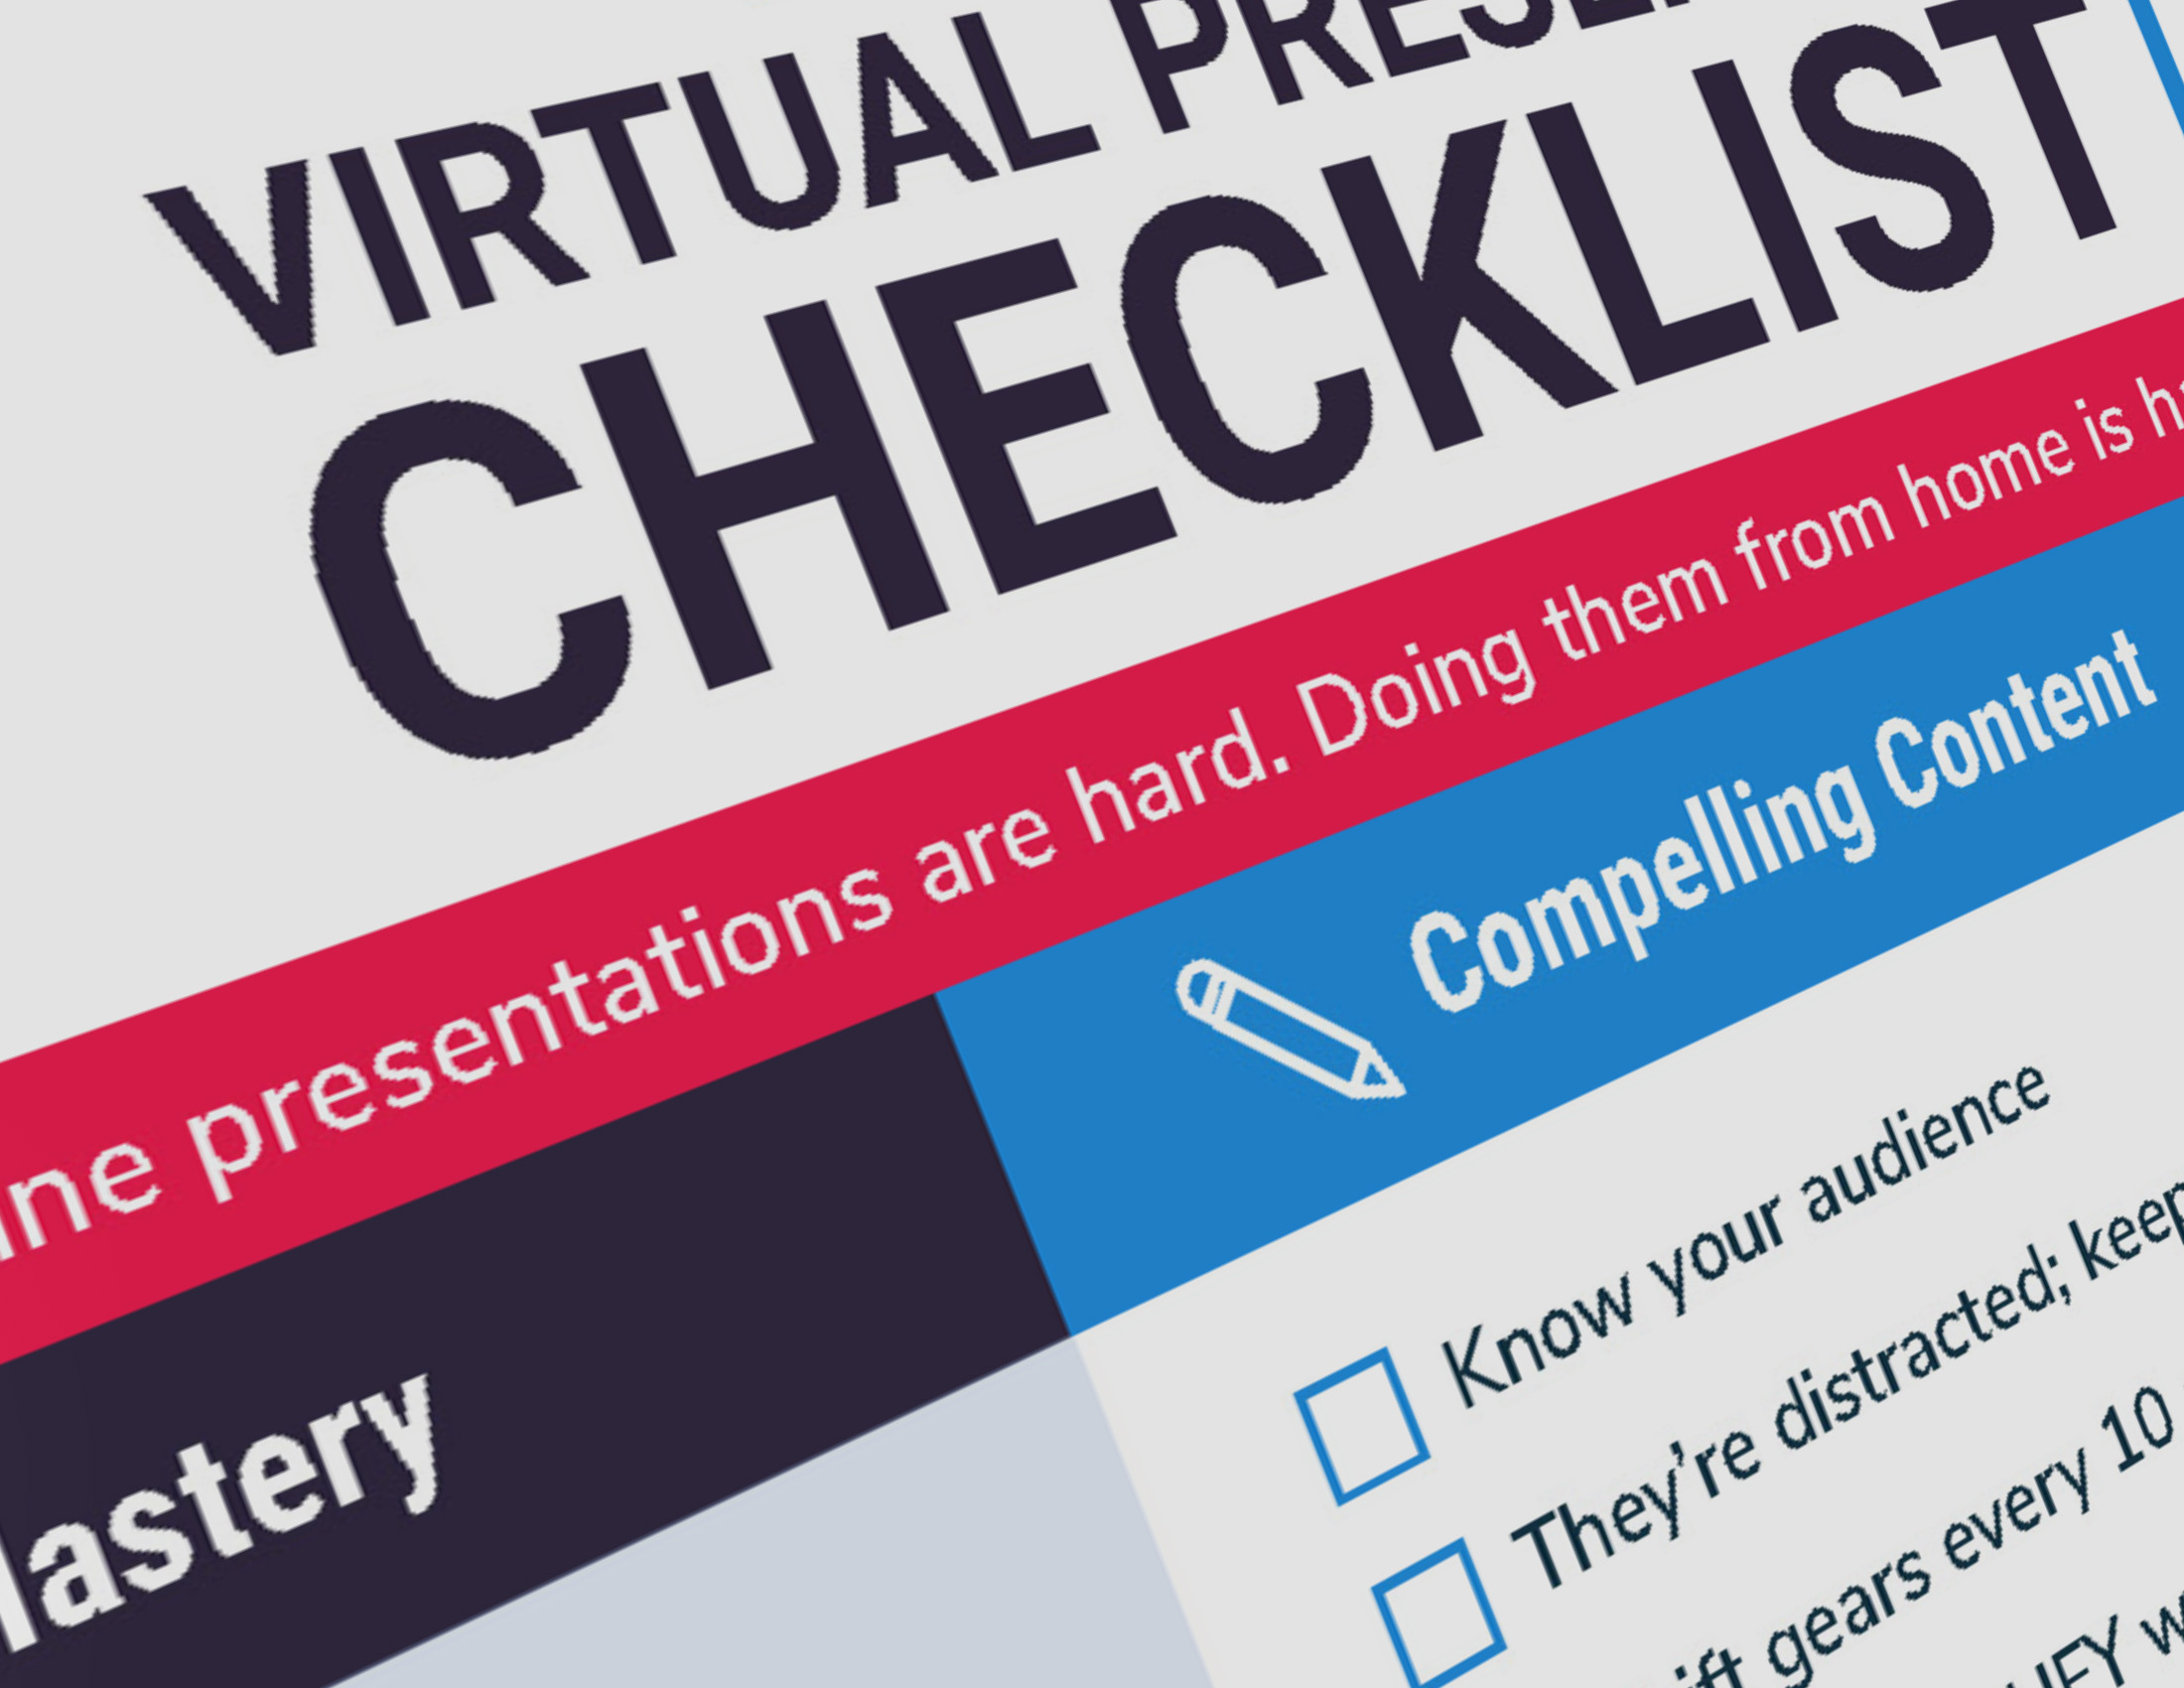 Virtual Presentation Checklist